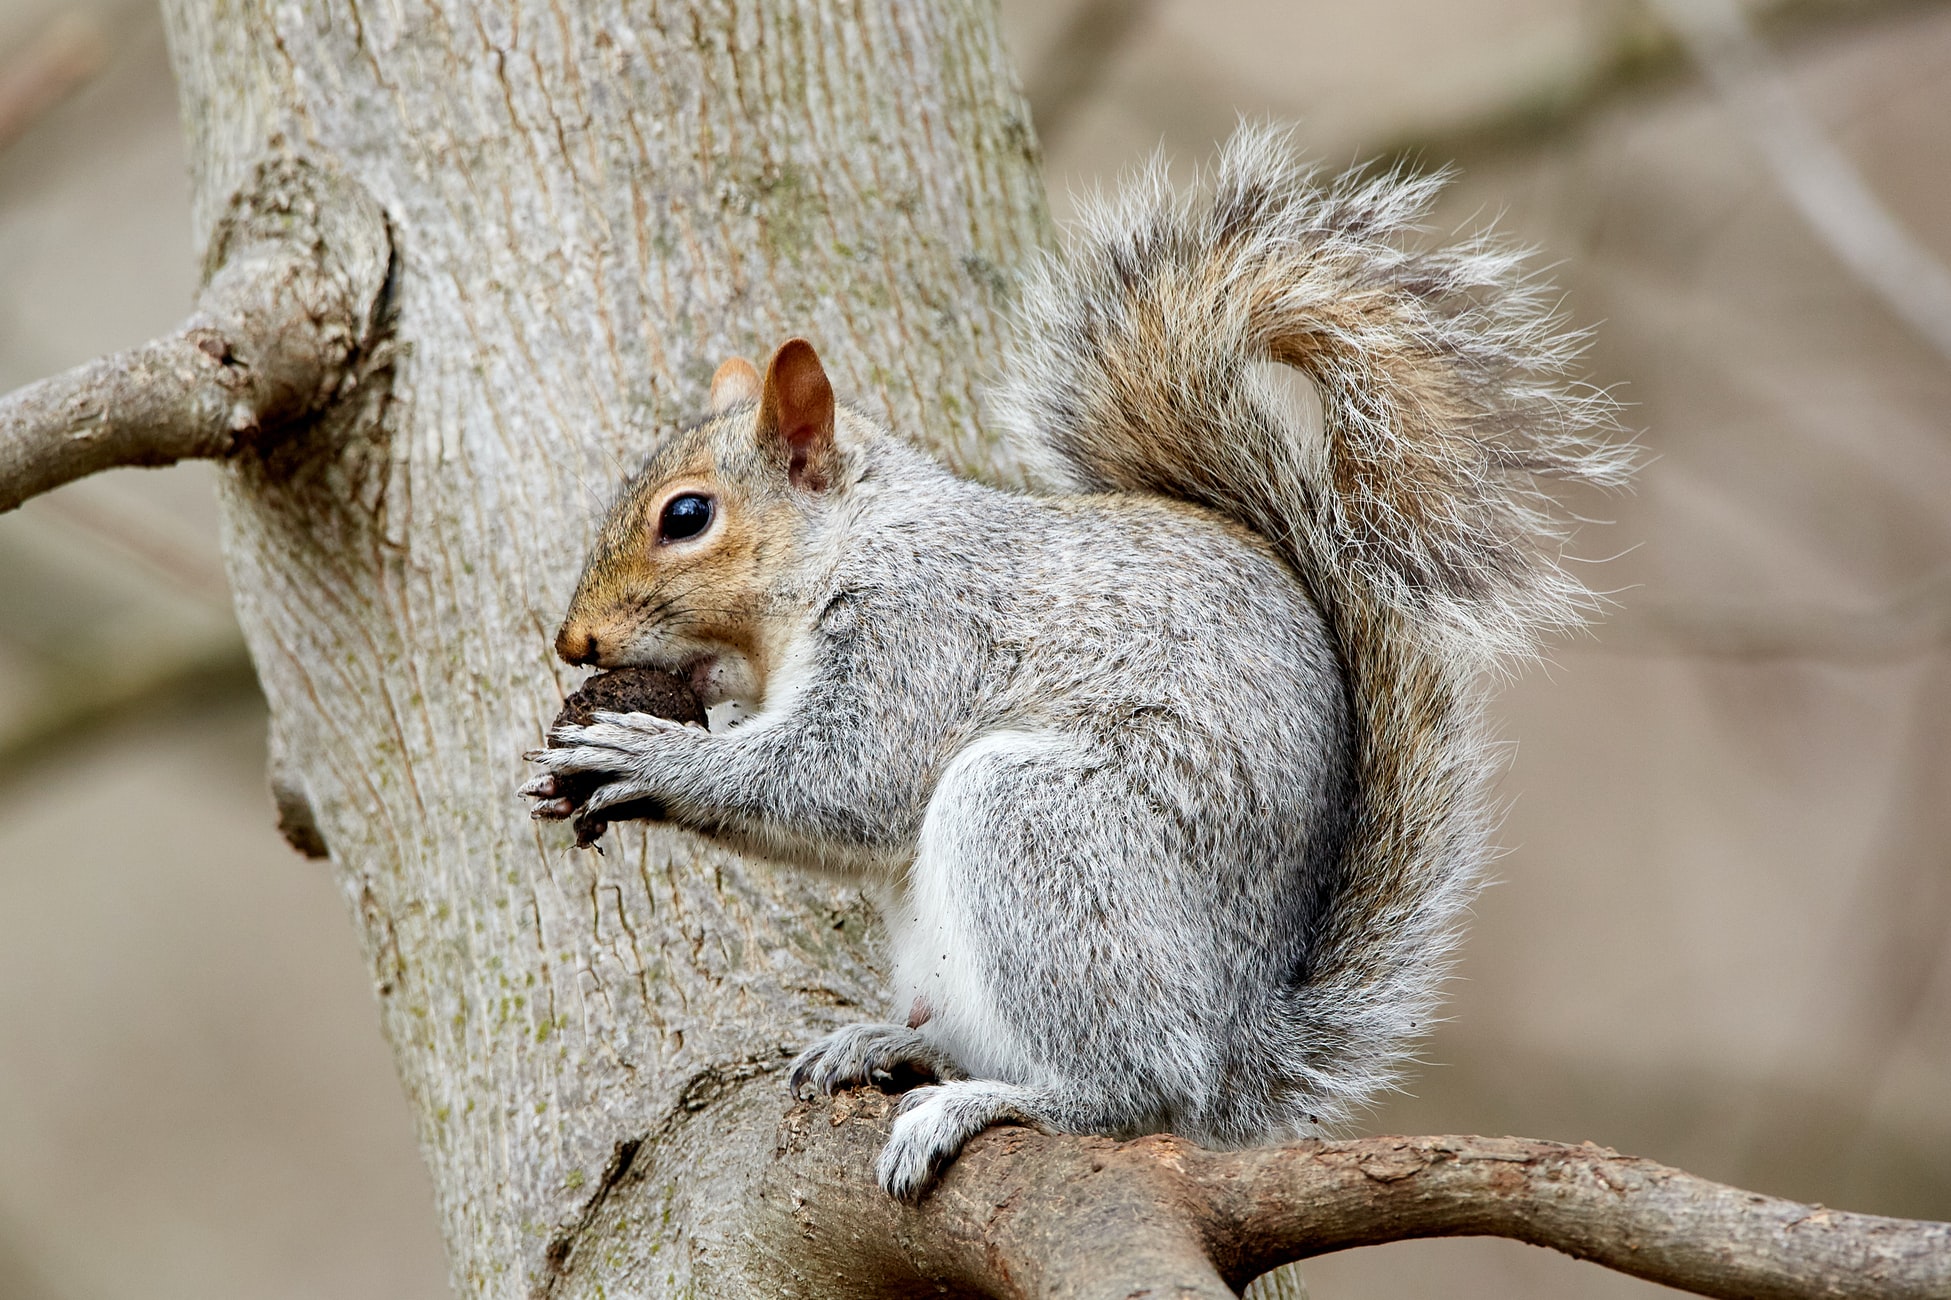 Premiere Pest Patrol in Edmonton can help you address Squirrel infestations